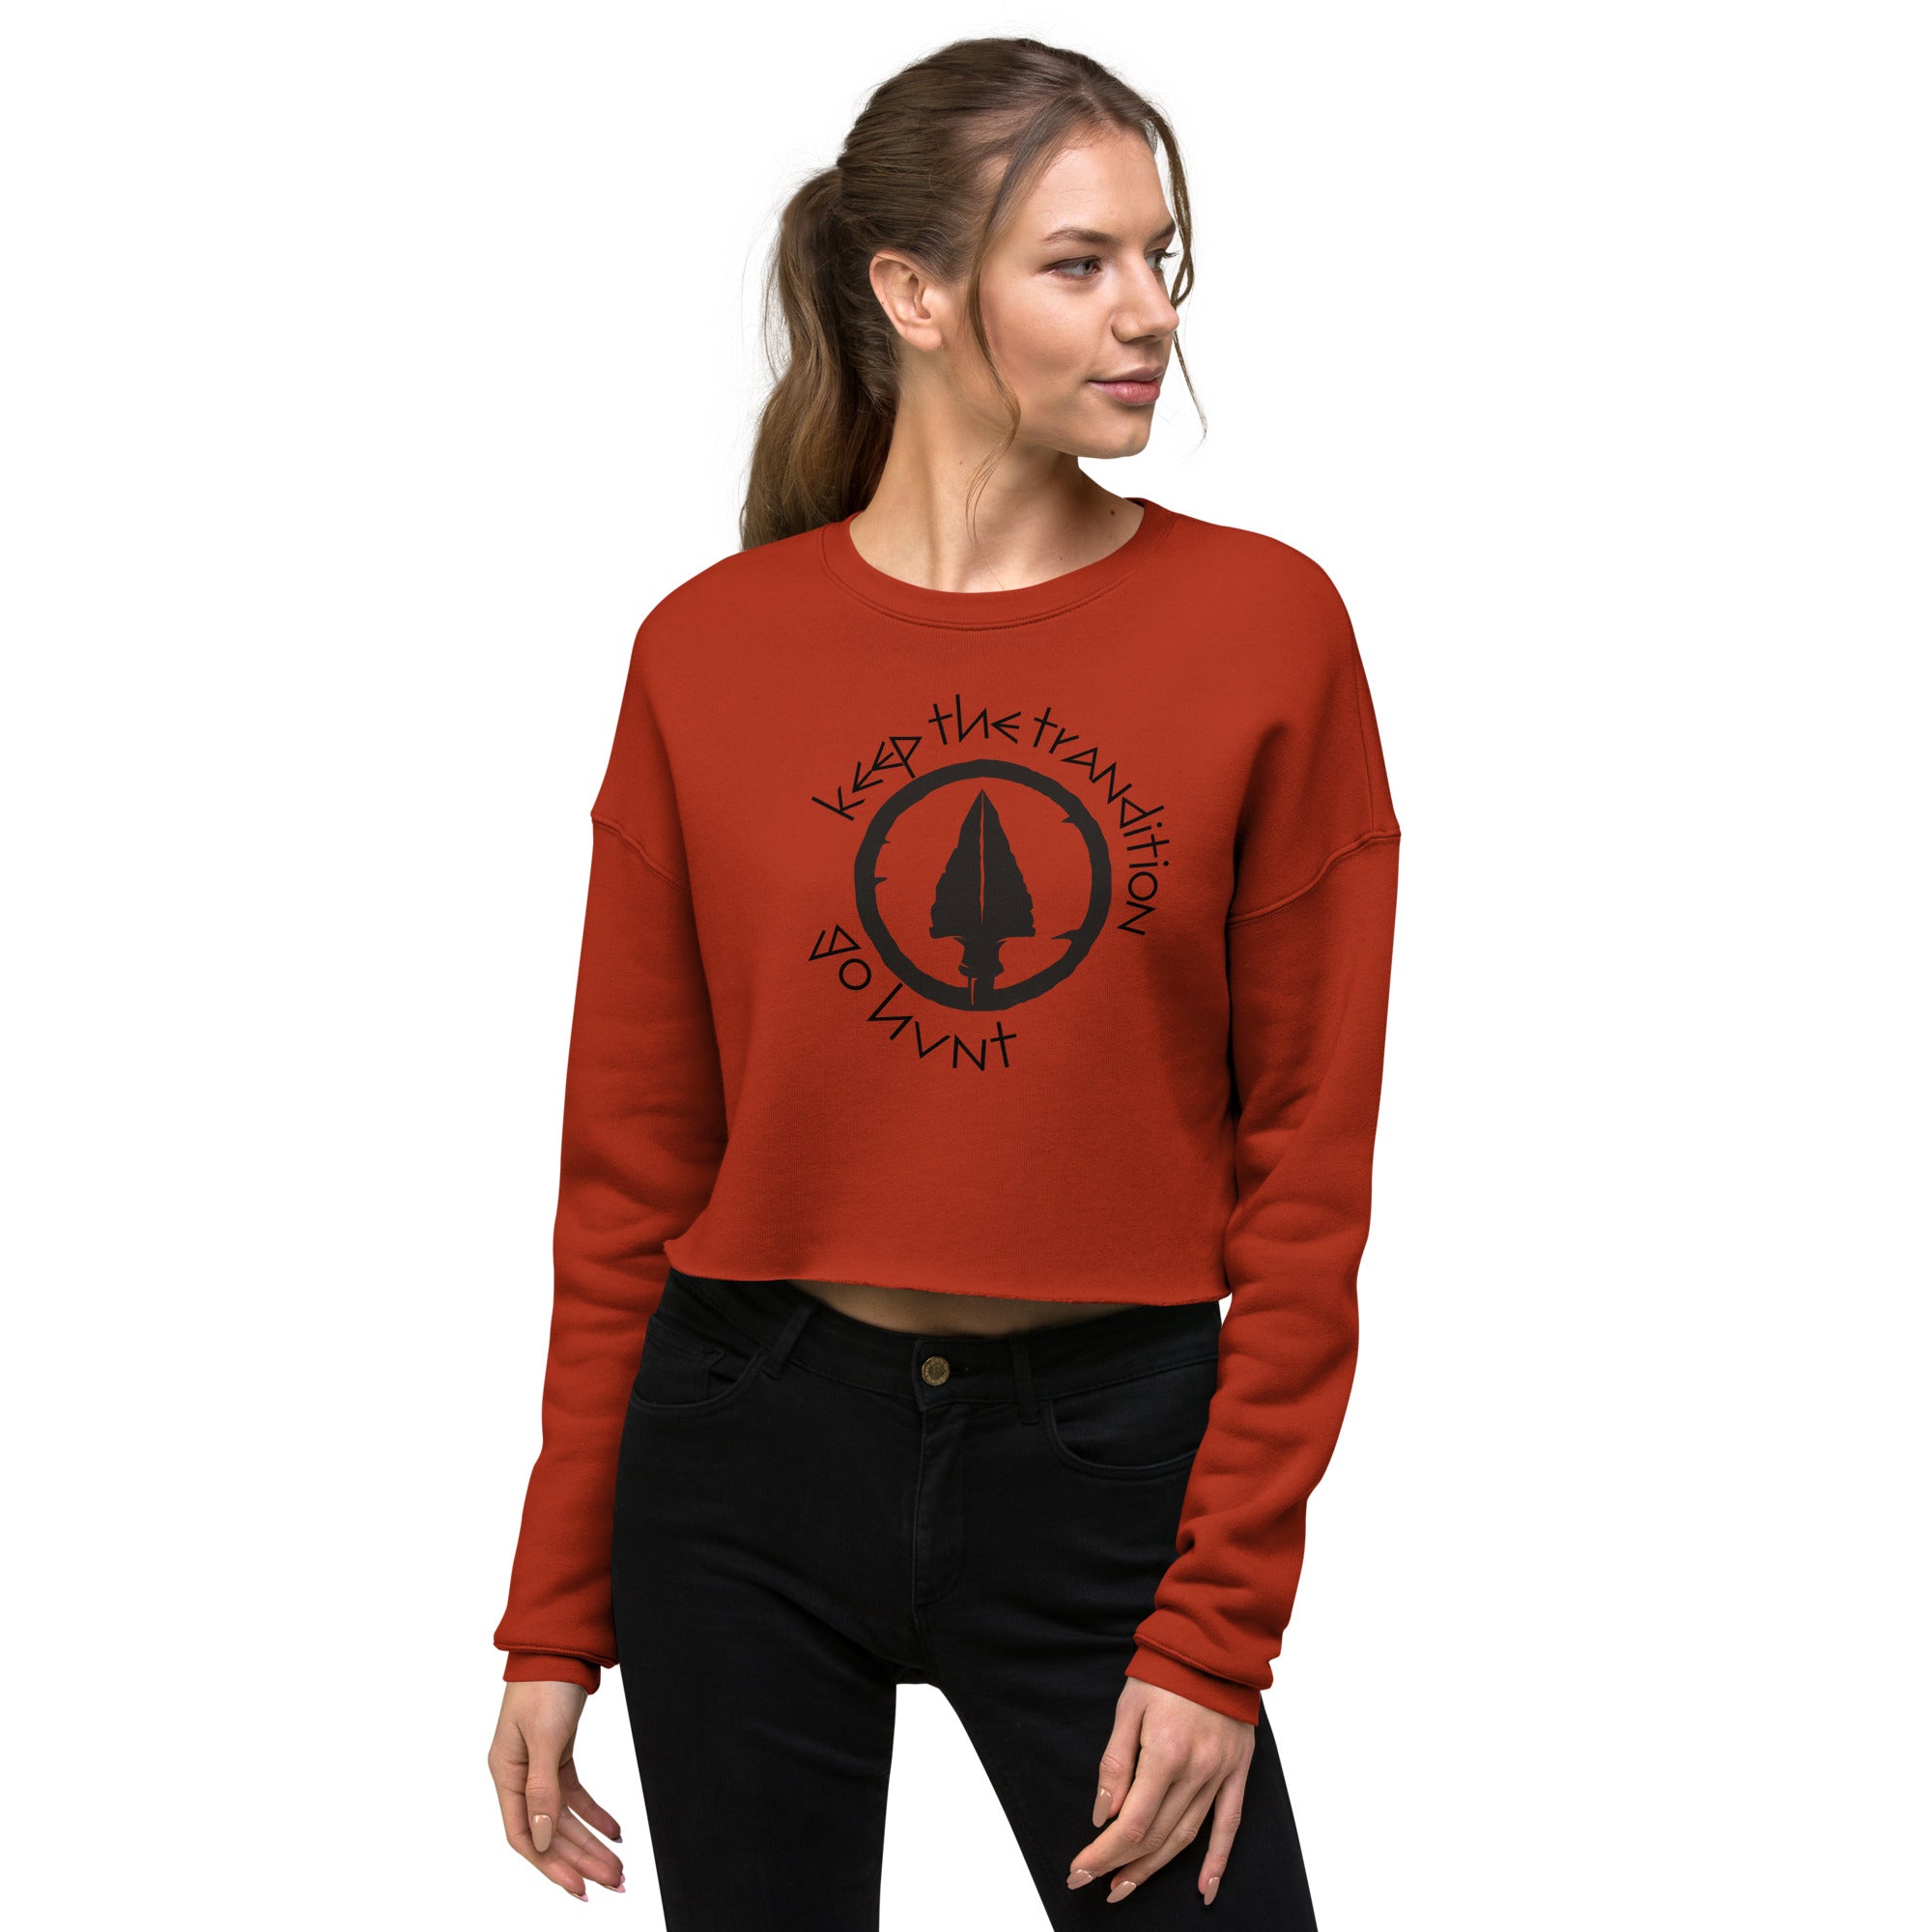 Keep The Tradition Women's Crop Sweatshirt - Go Hunt